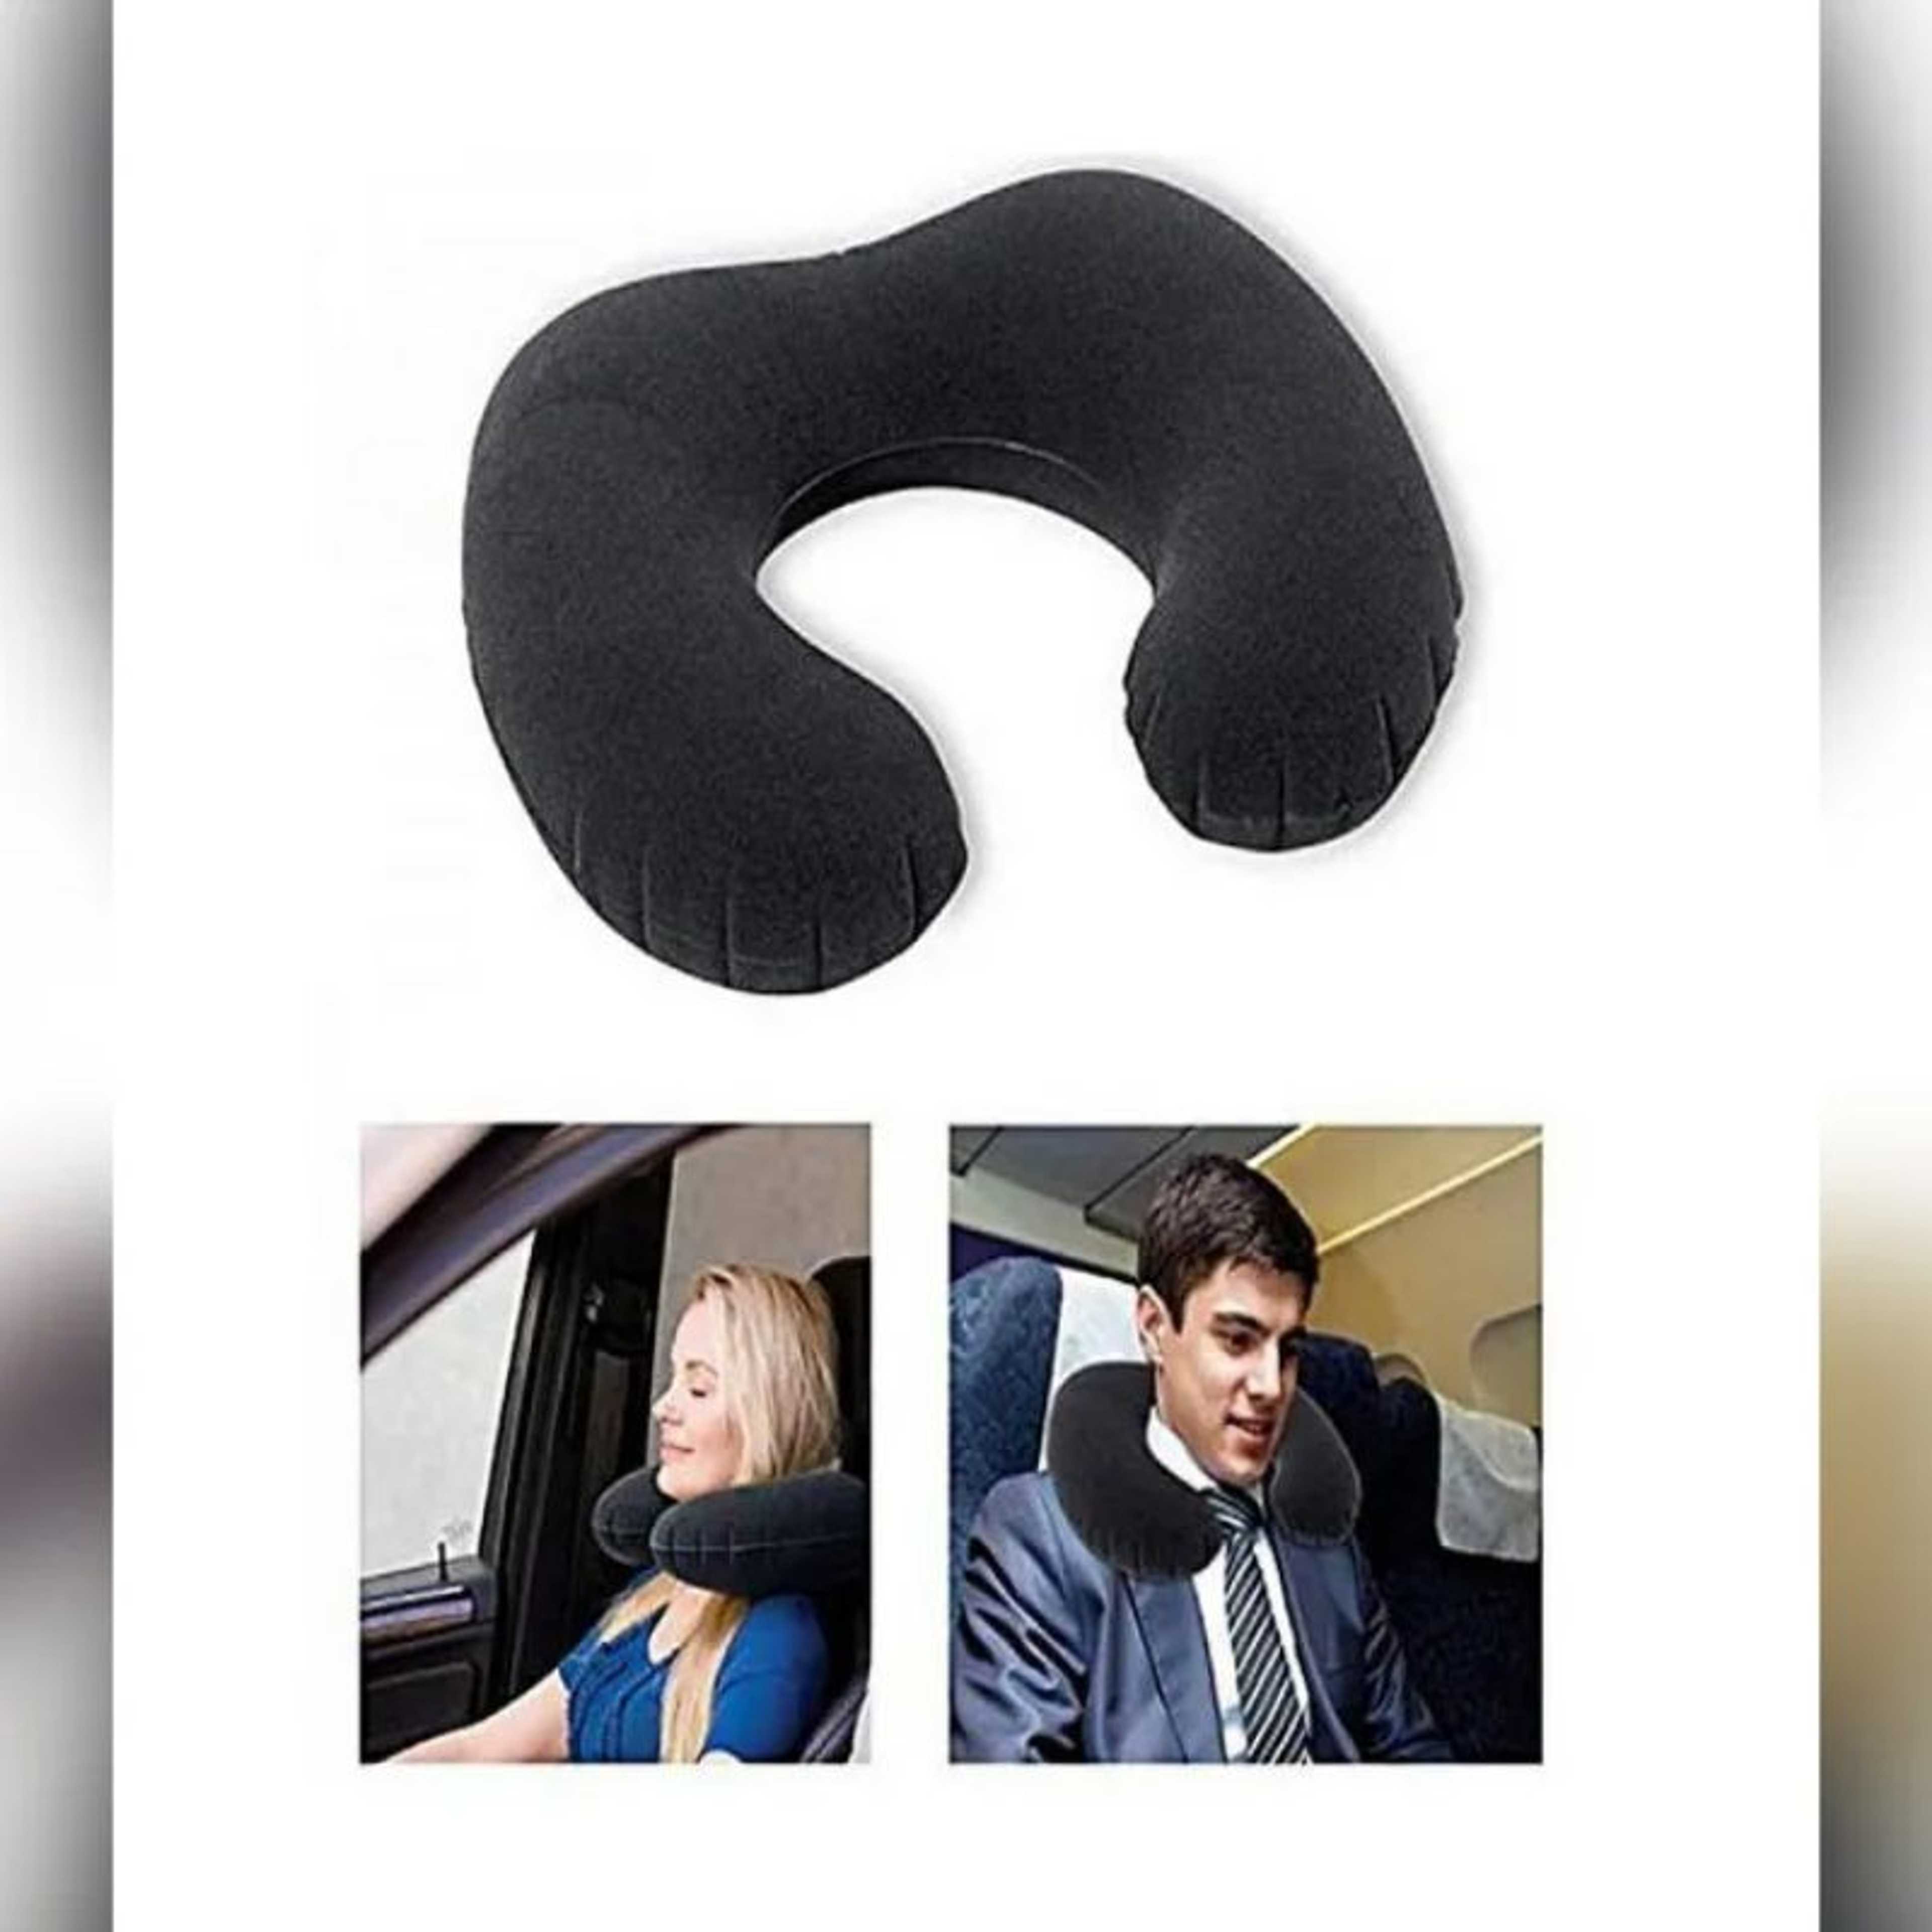 Intex Comfortable Car Air Neck Pillow For Travel - Black